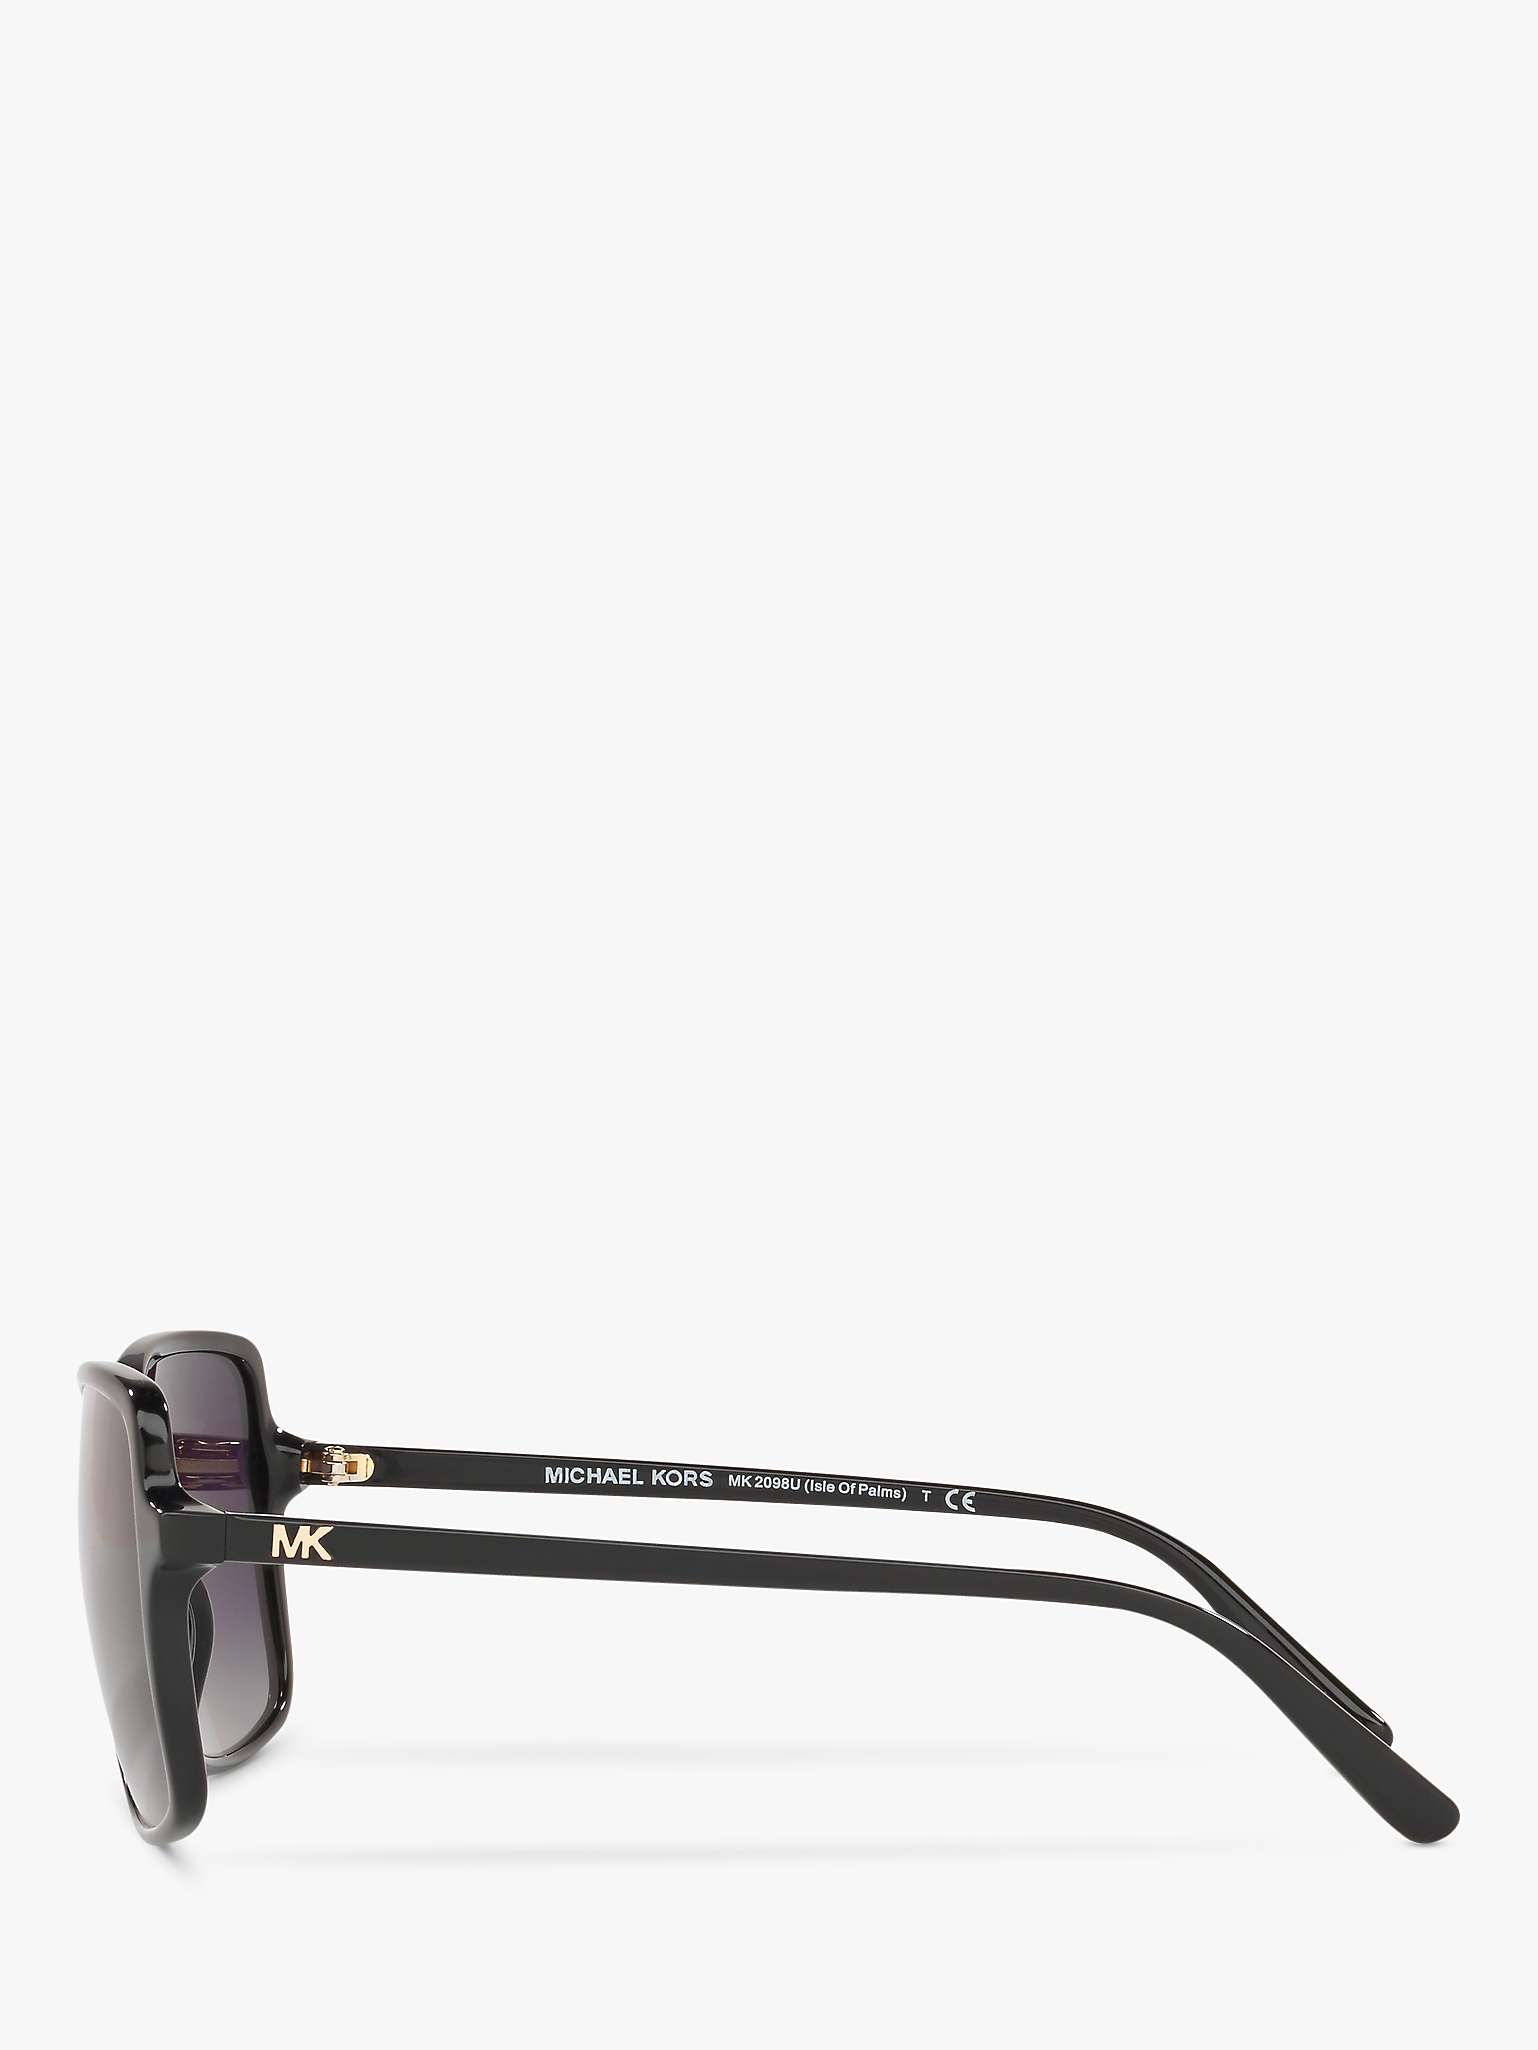 Buy Michael Kors MK2098U Women's Isle of Palms Polarised Square Sunglasses, Black/Grey Gradient Online at johnlewis.com